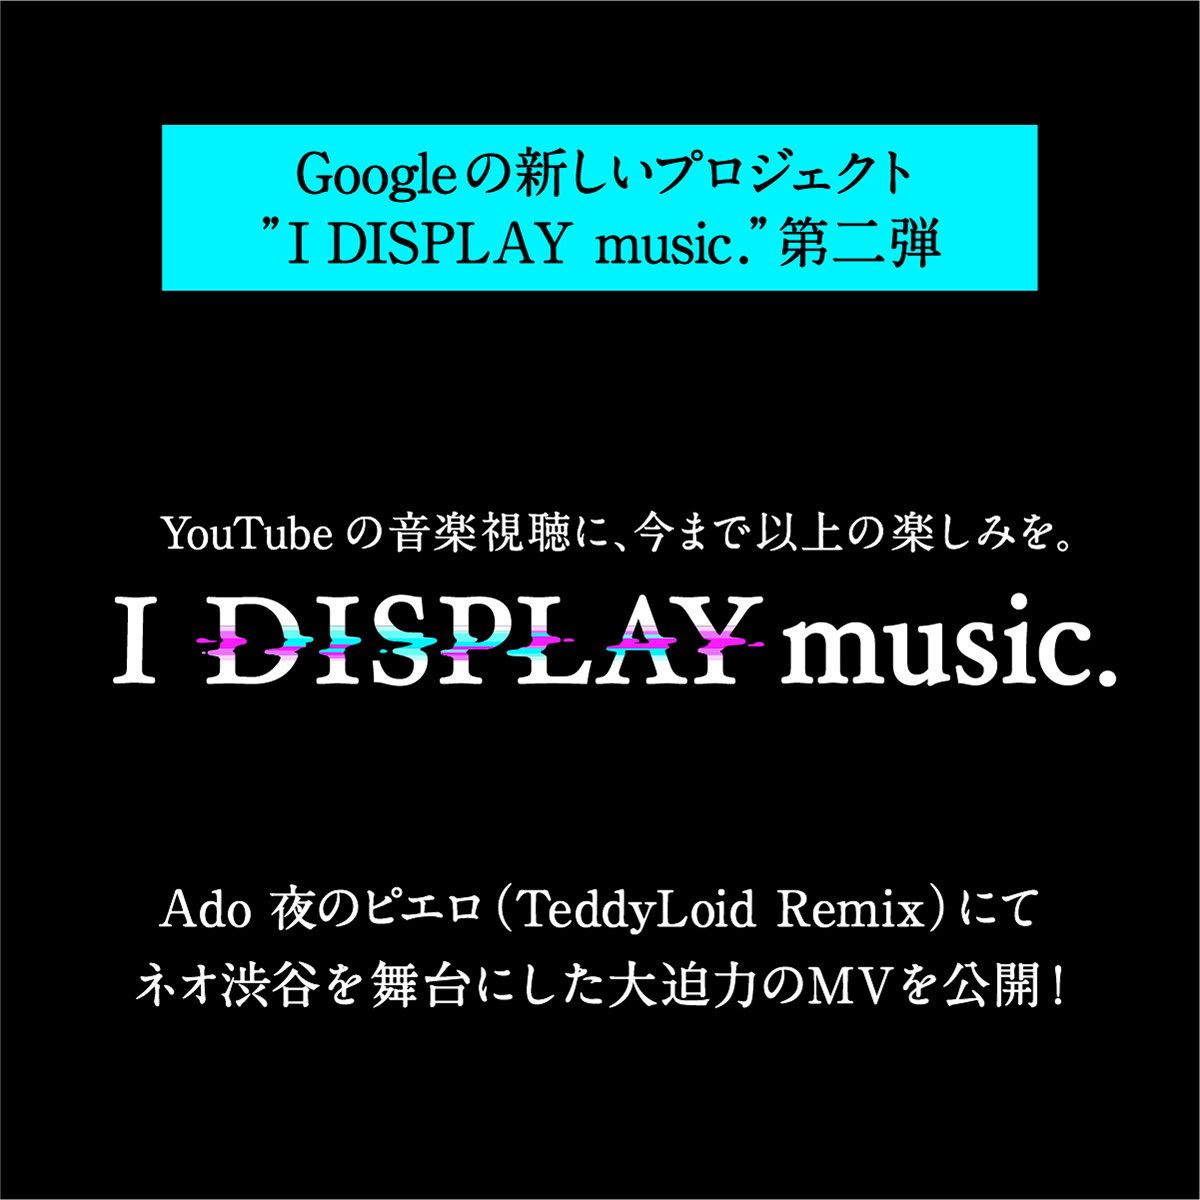 Google「I DISPLAY music.」告知画像